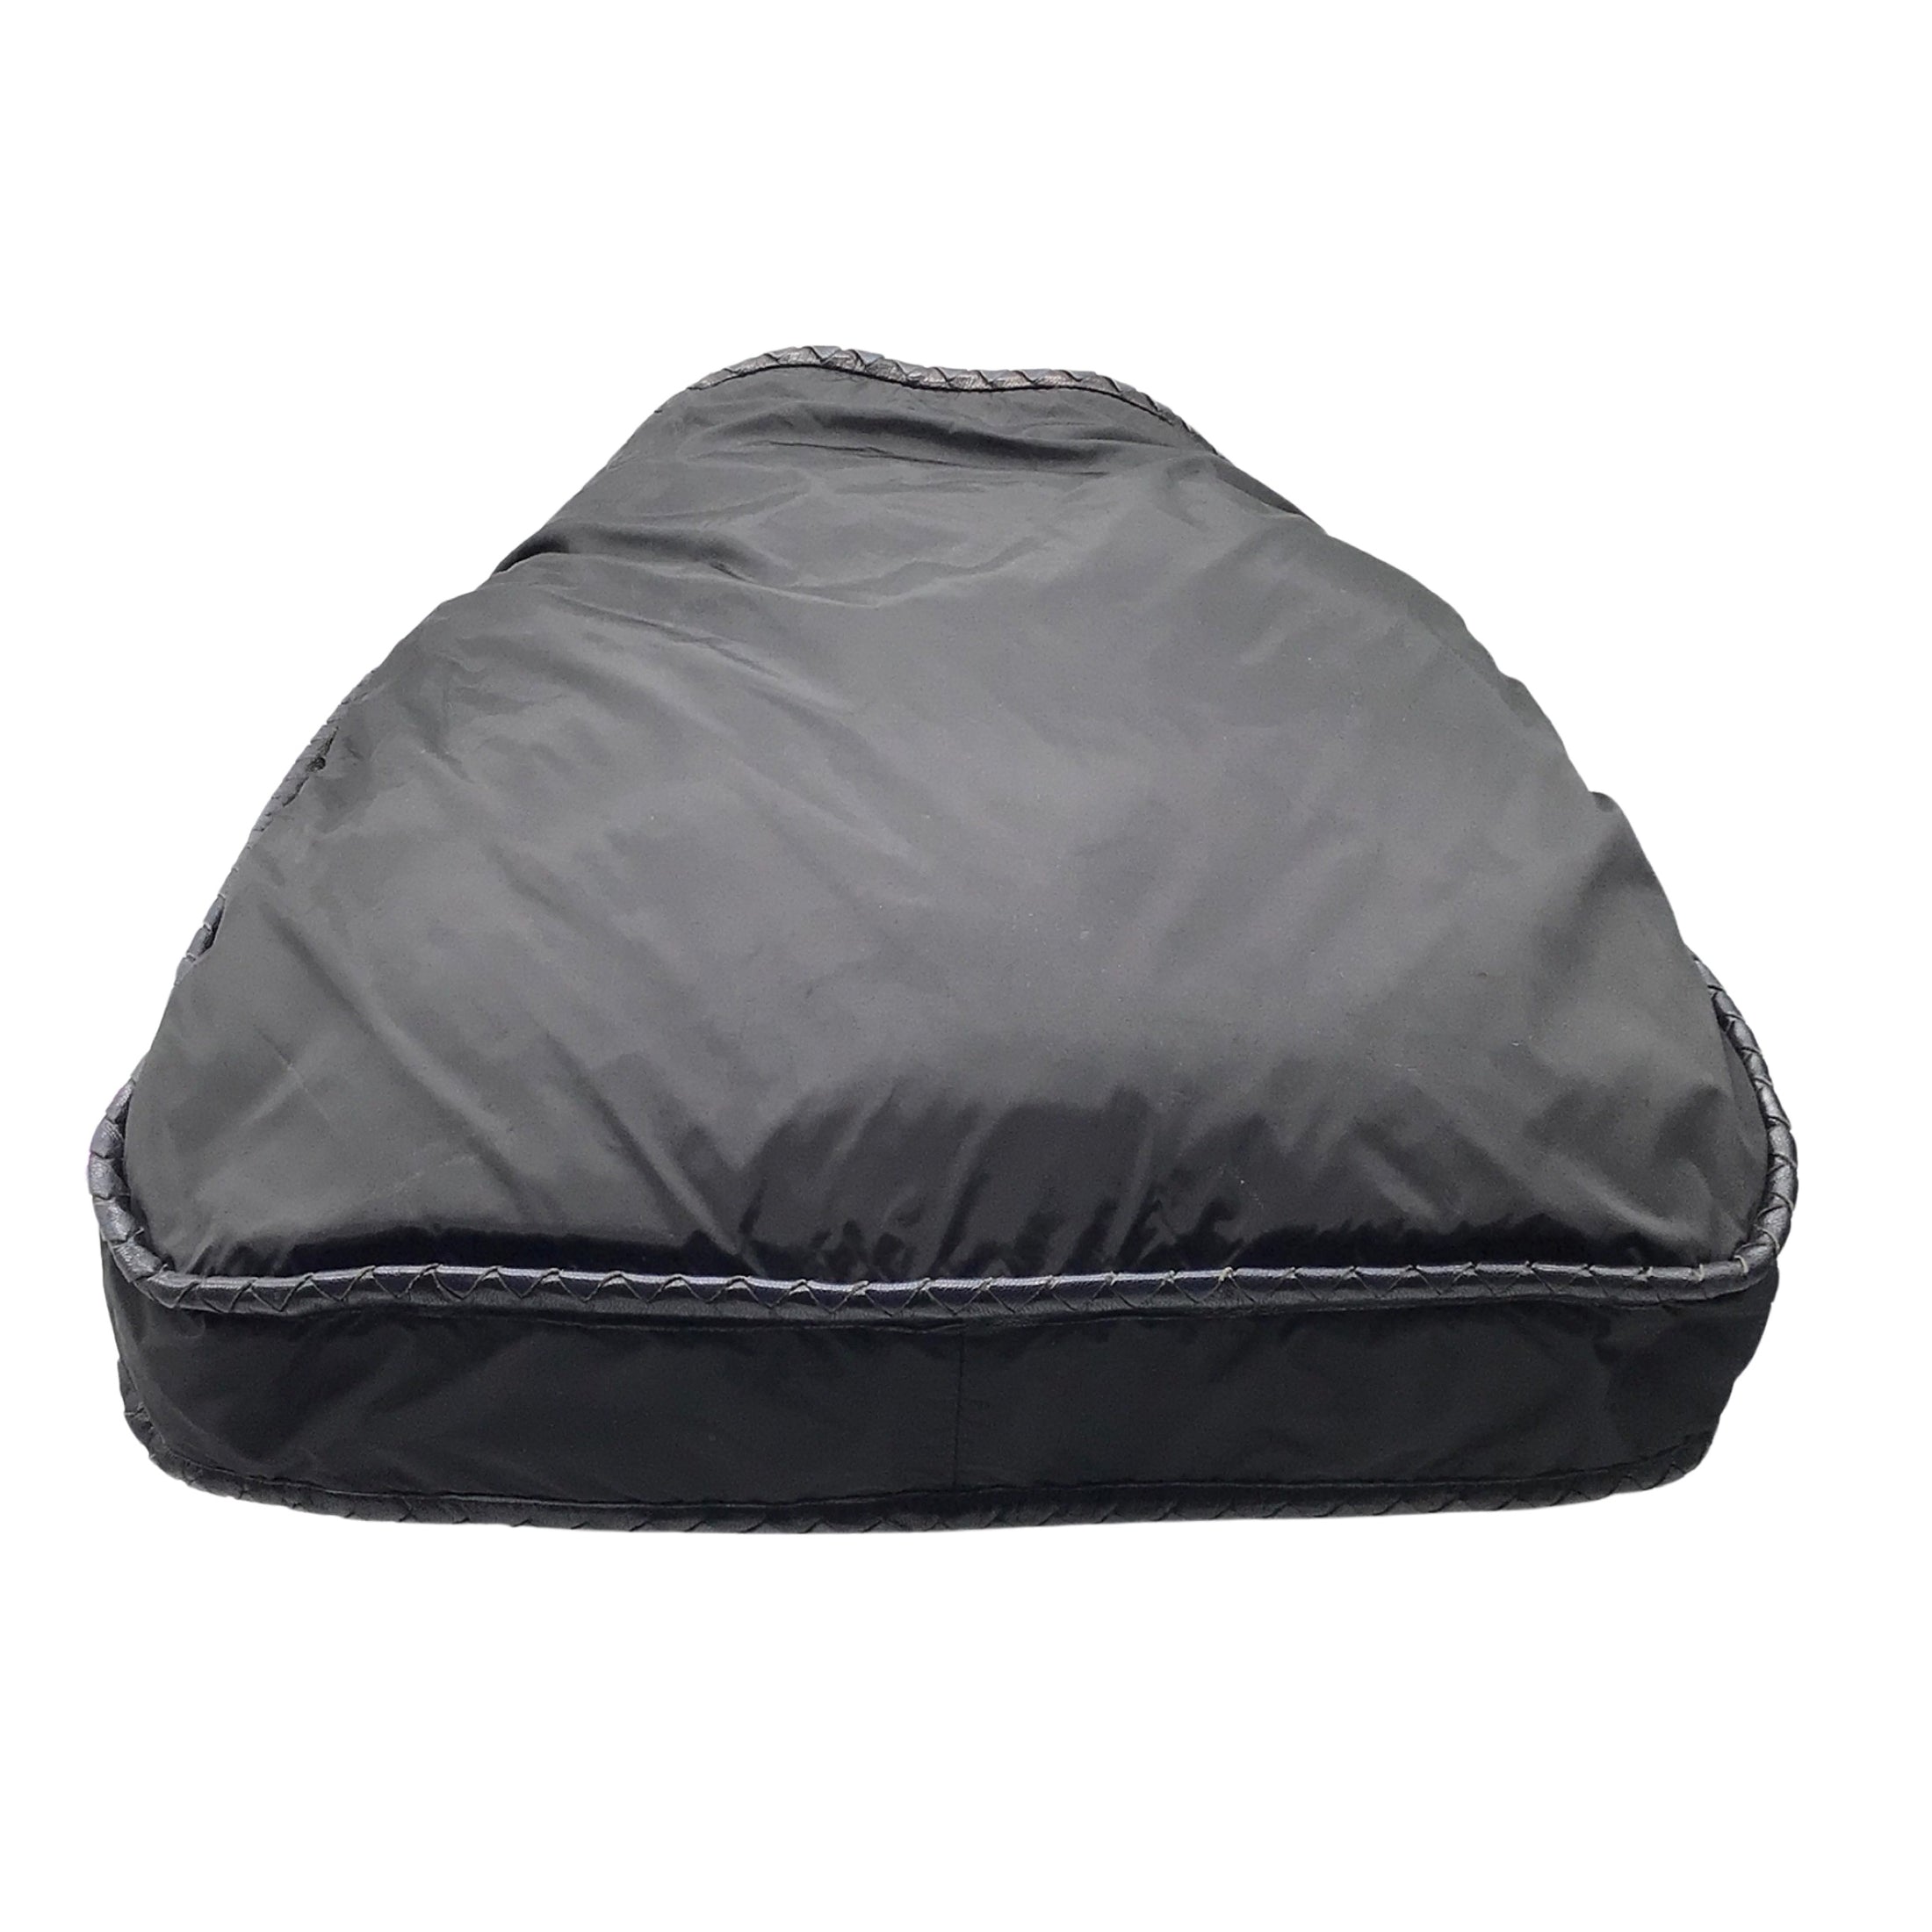 Bottega Veneta Black / Navy Blue Intrecciato Woven Leather Trimmed Tessuto Bag